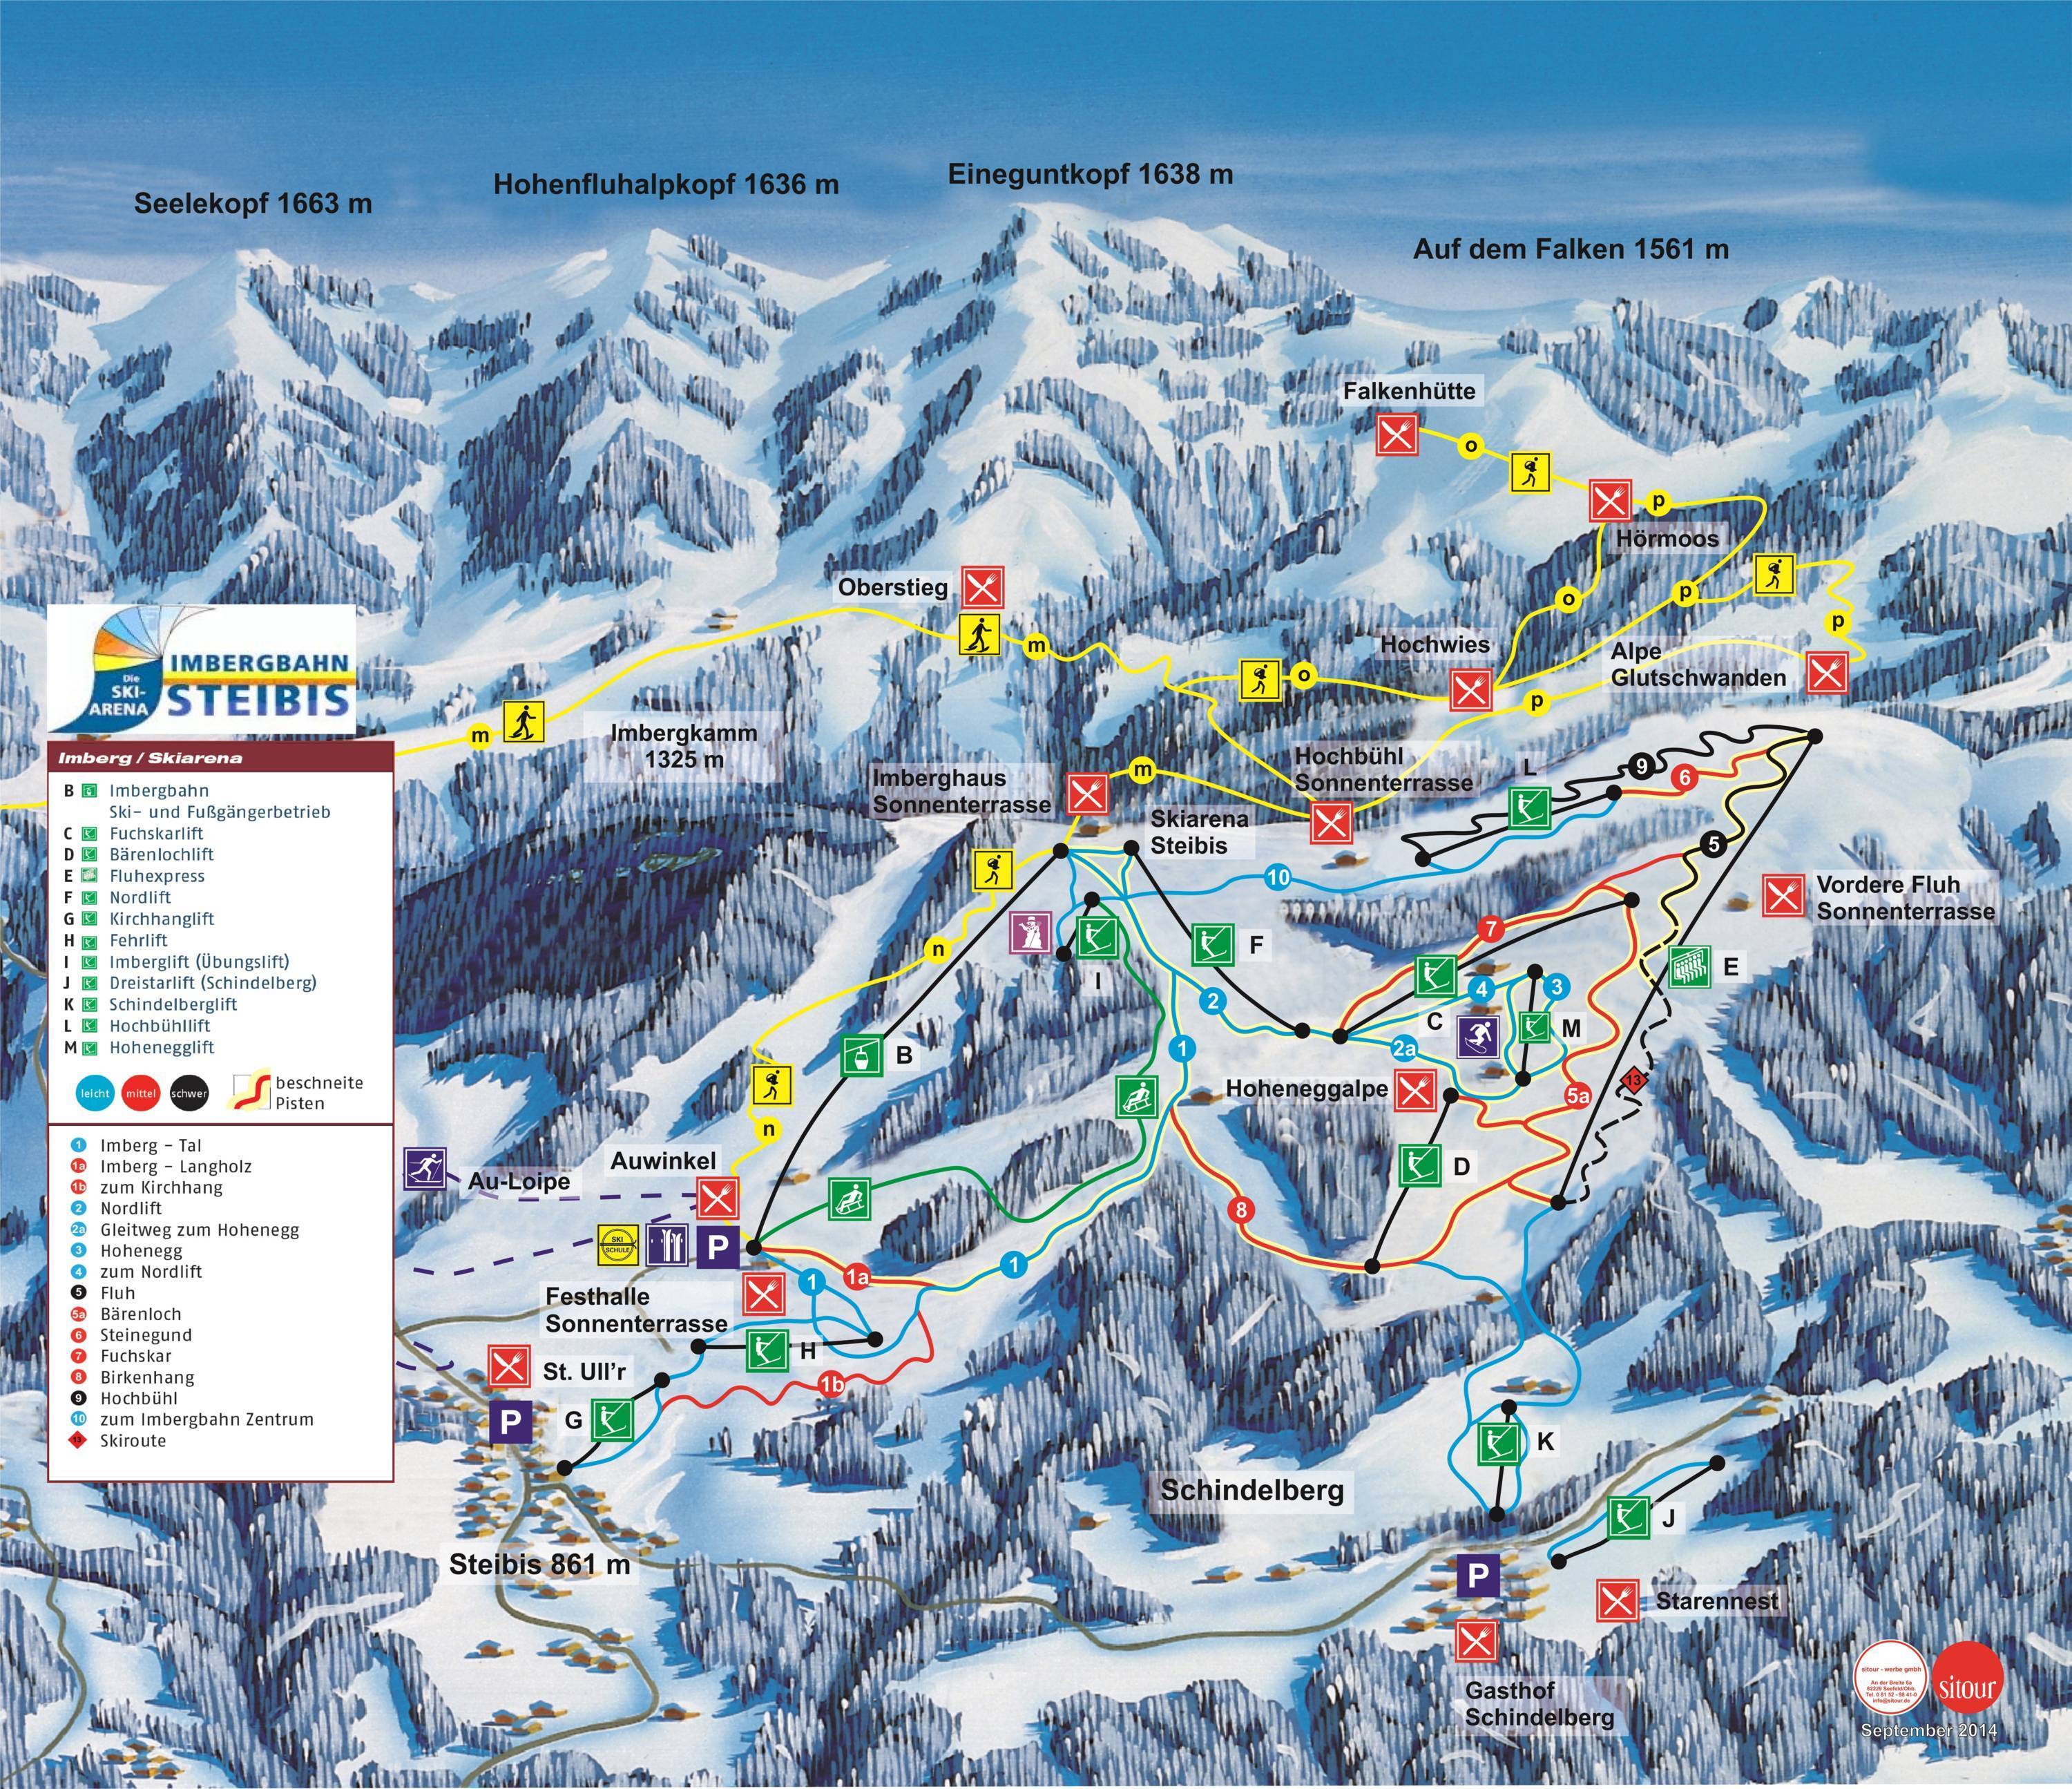 Oberstaufen/Steibis/Imberg Piste / Trail Map